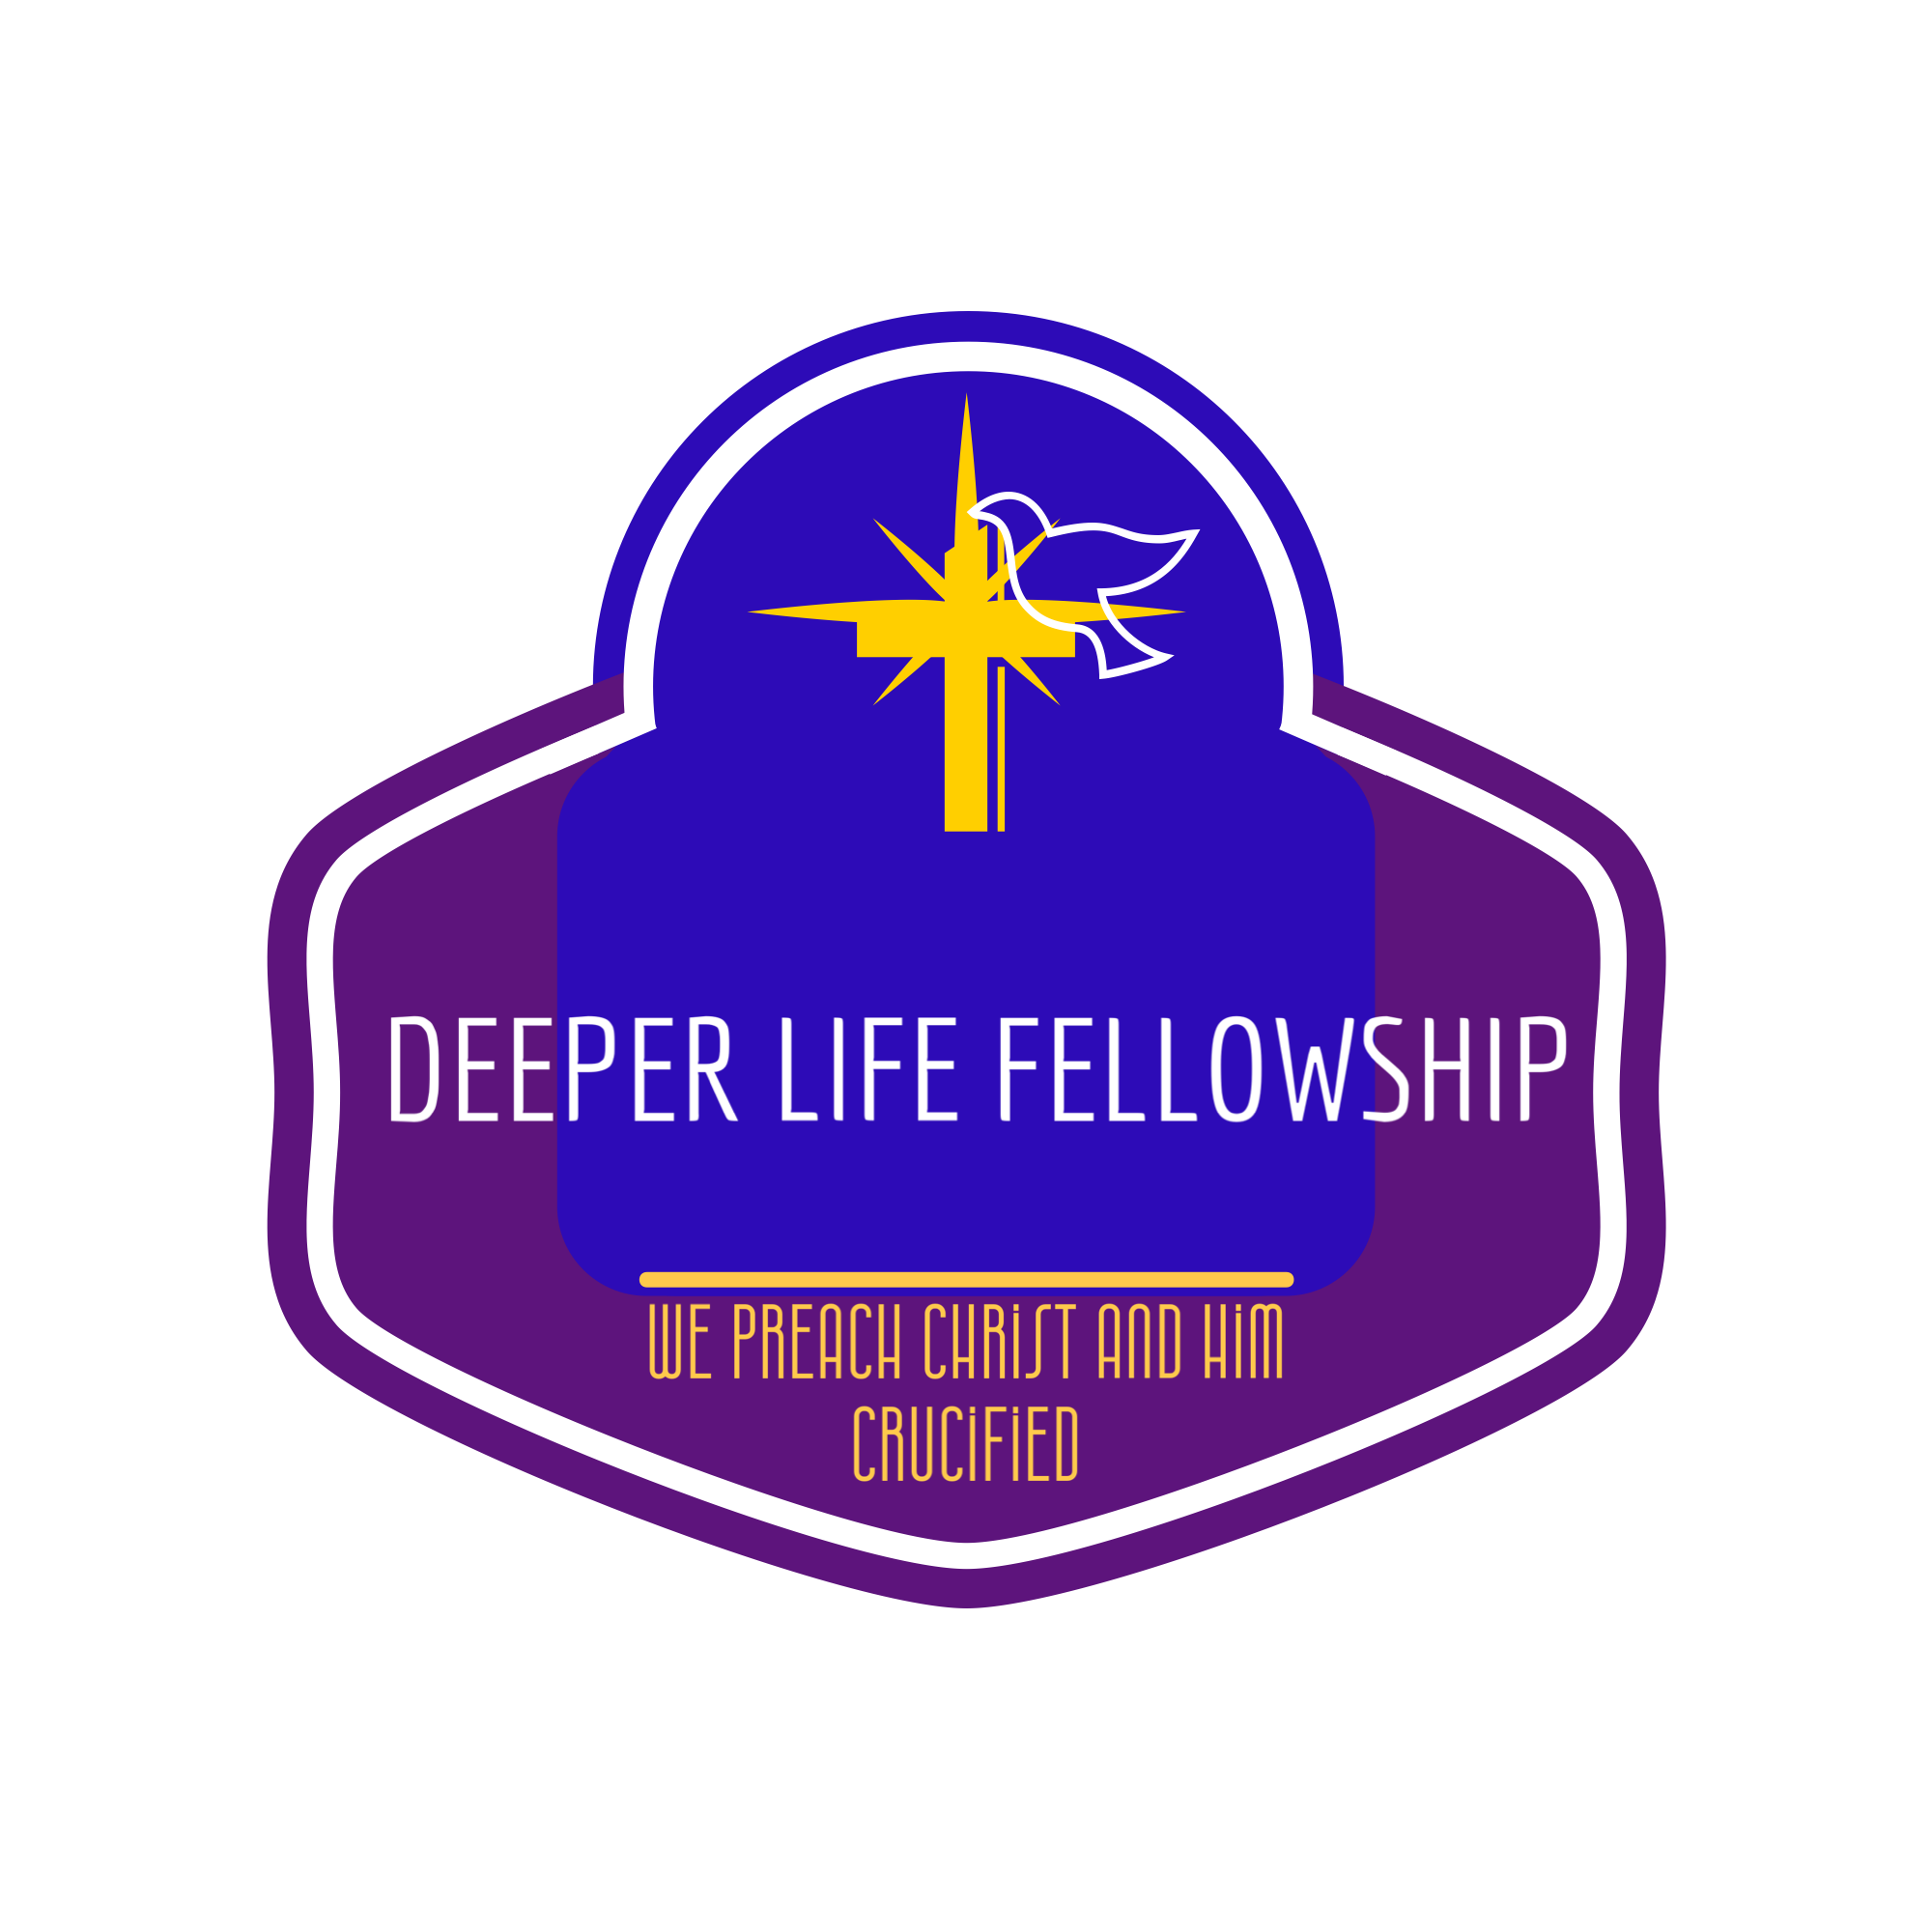 Deeper Life fellowship UK